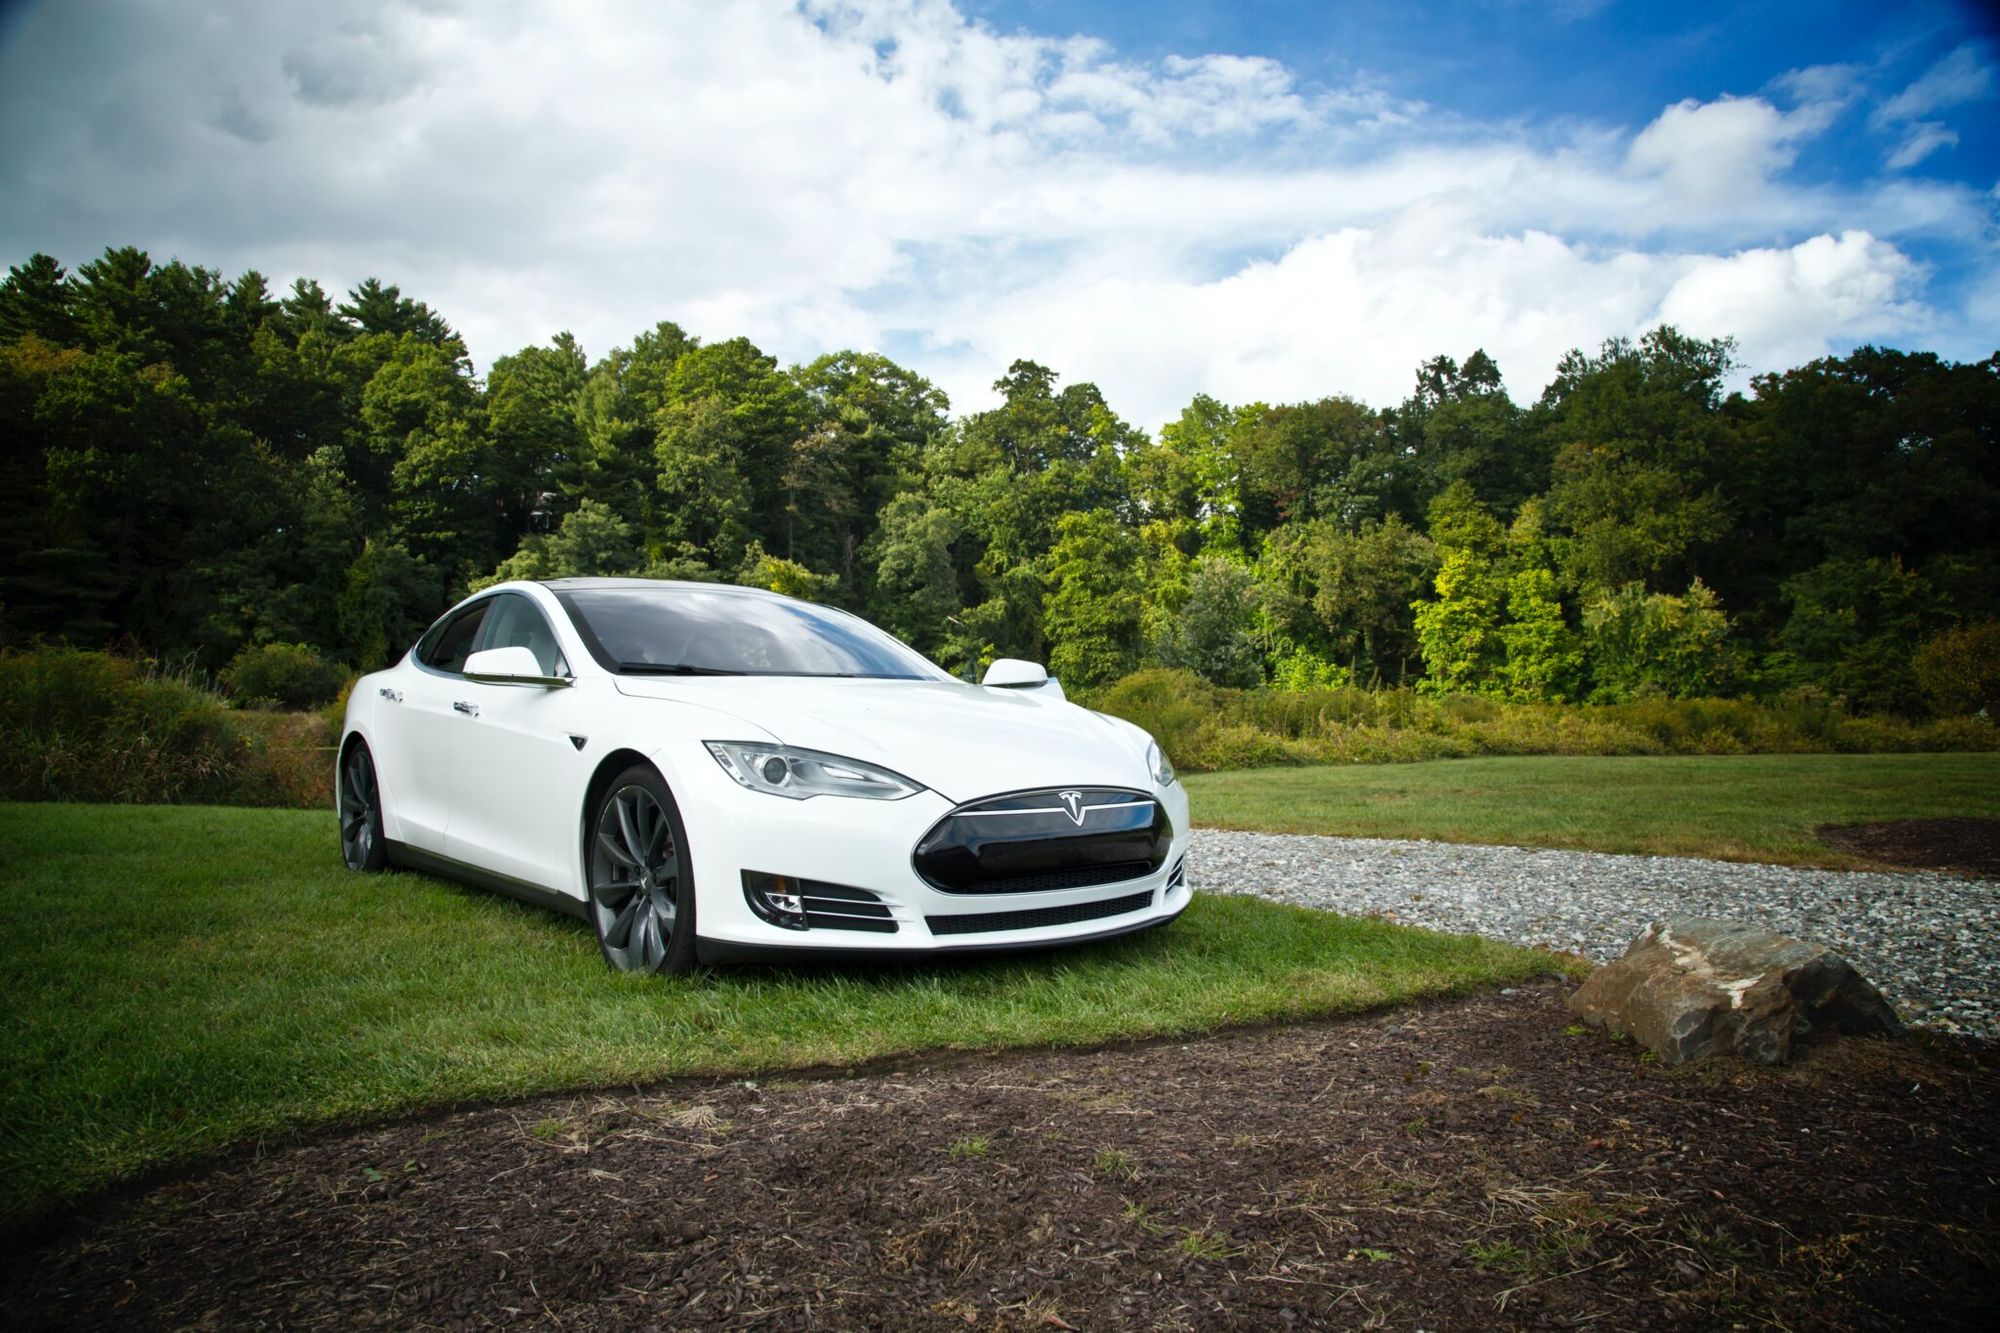 Top 5 benefits of buying a Tesla in Australia